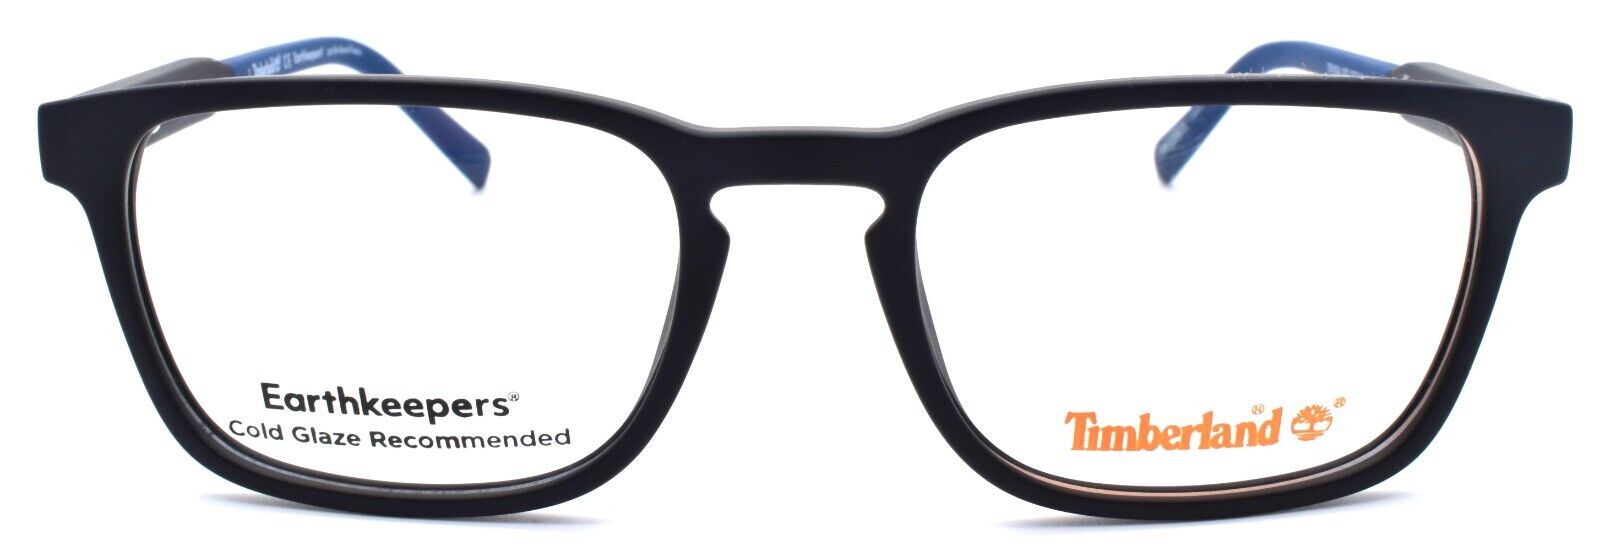 2-TIMBERLAND TB1624 002 Men's Eyeglasses Frames 52-19-145 Matte Black-889214049063-IKSpecs